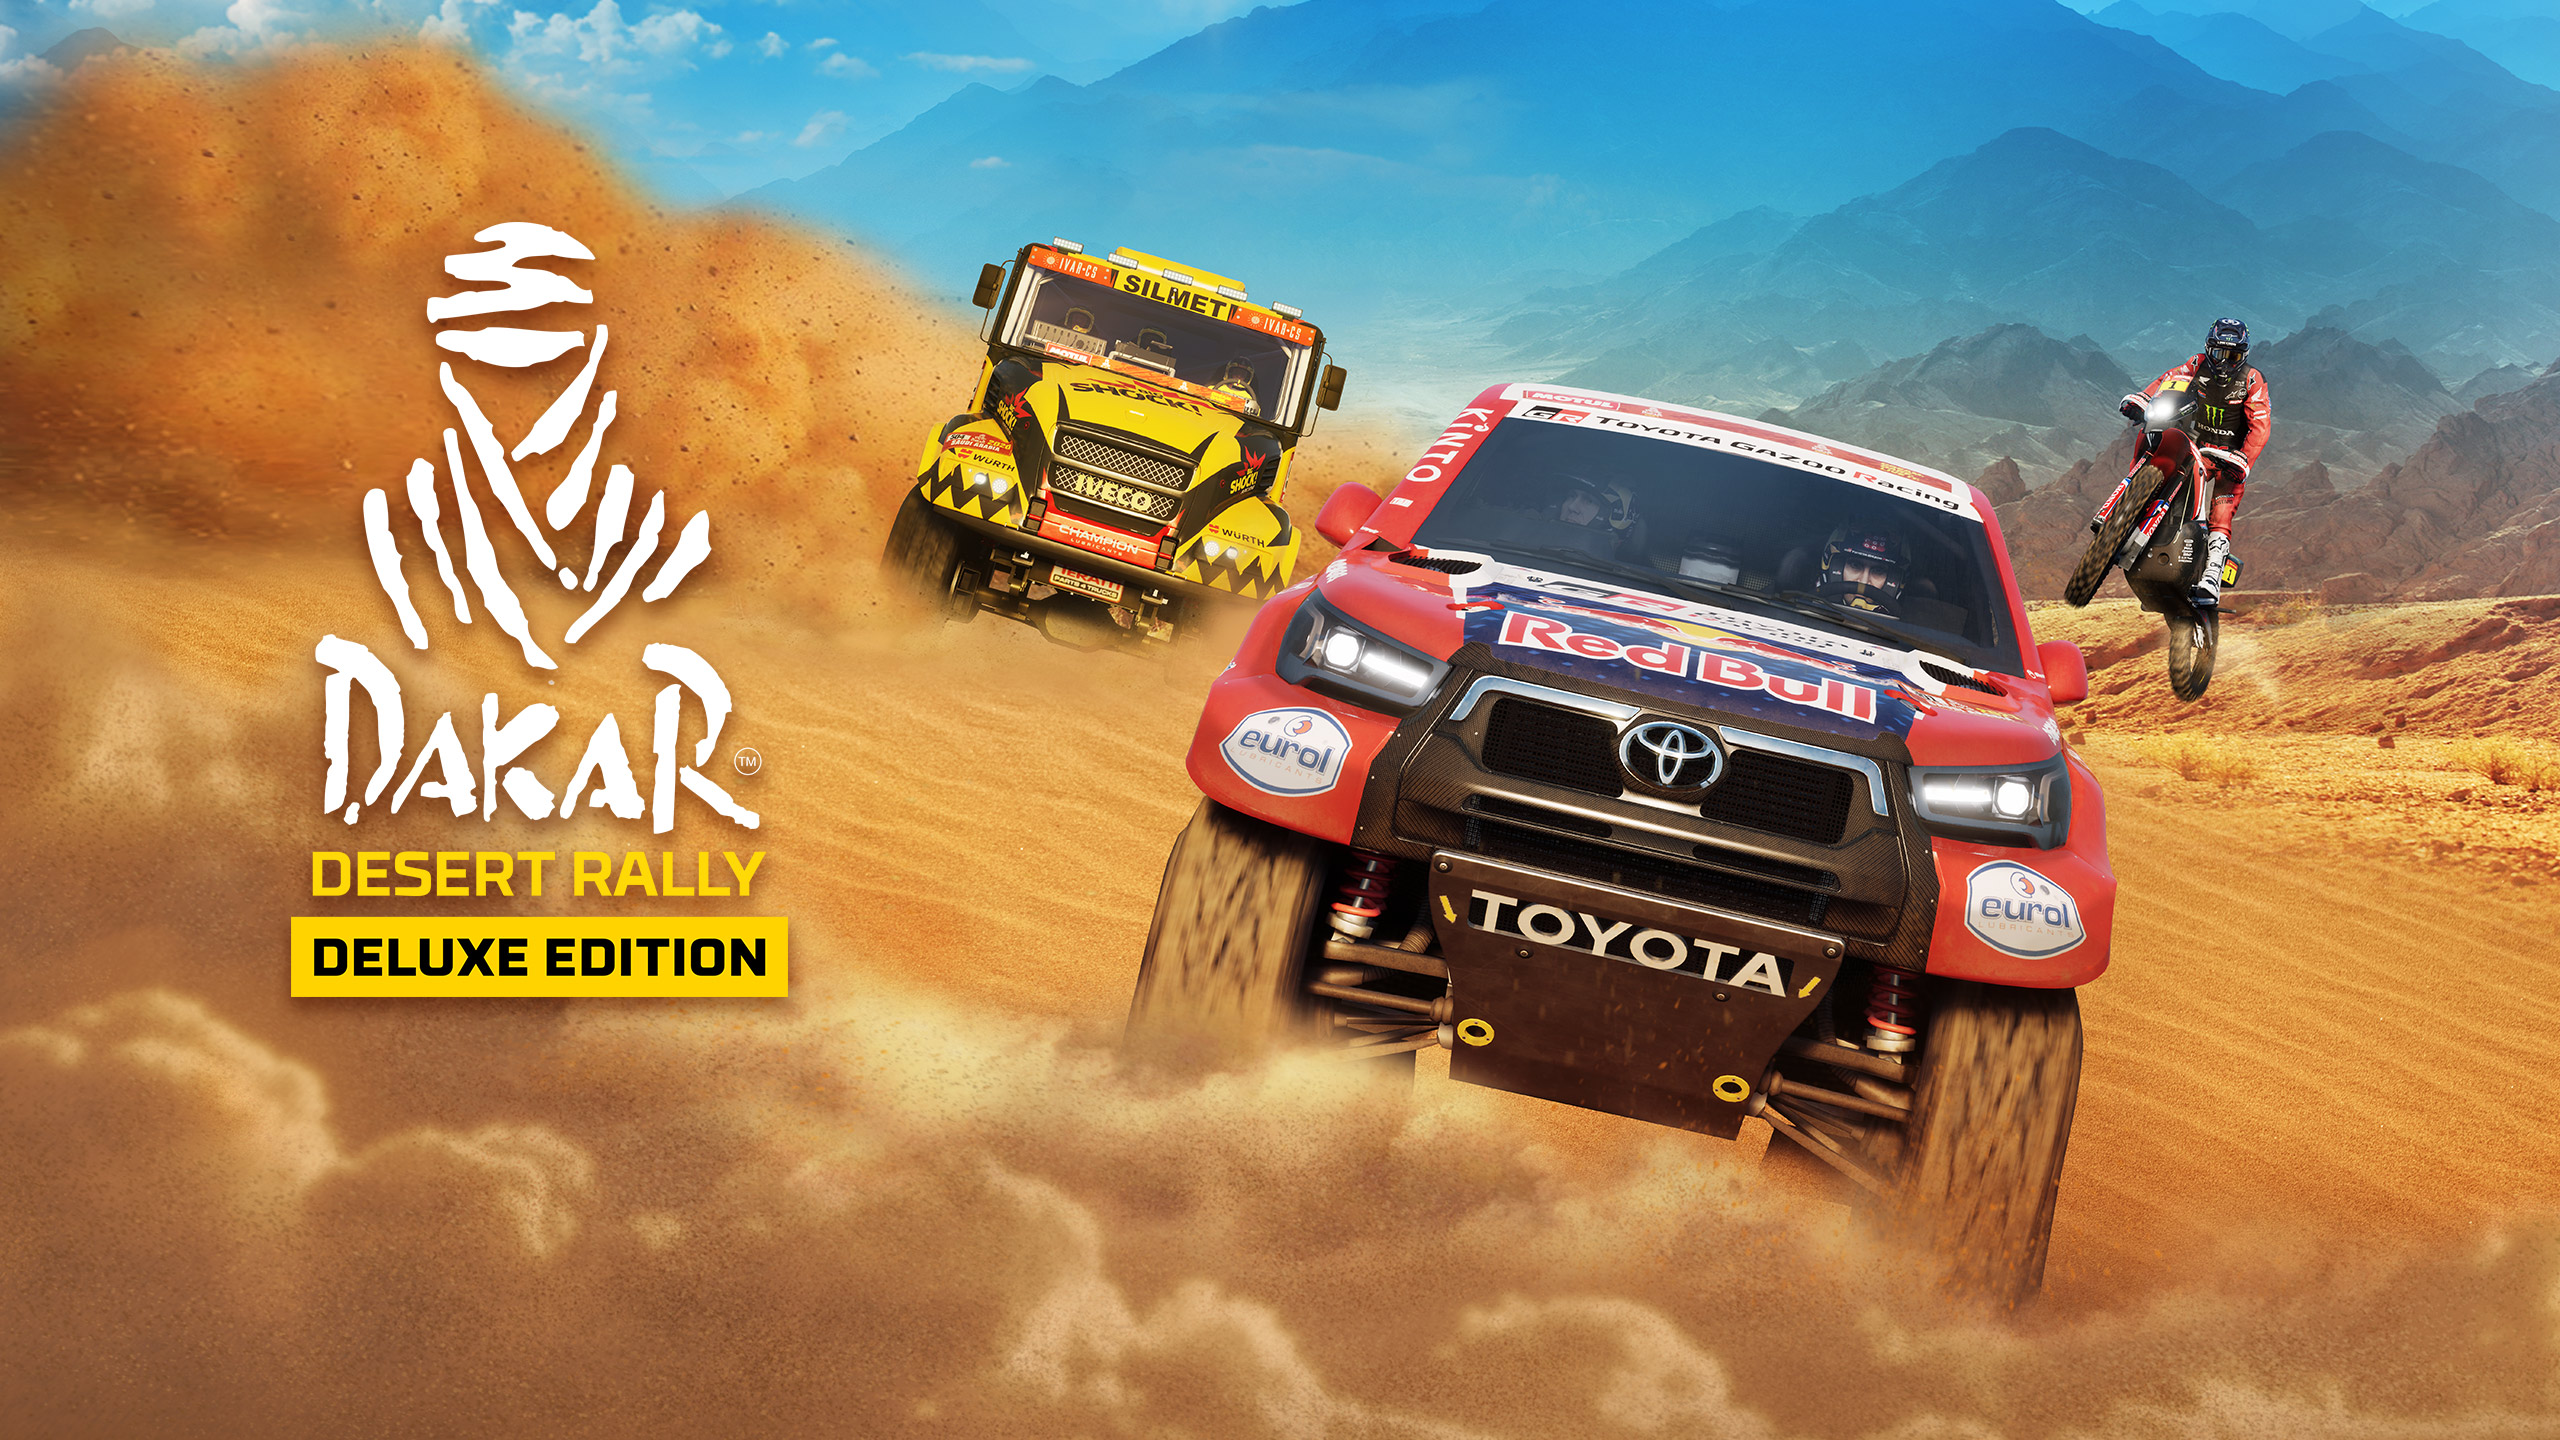 Dakar Desert Rally - Deluxe Edition 